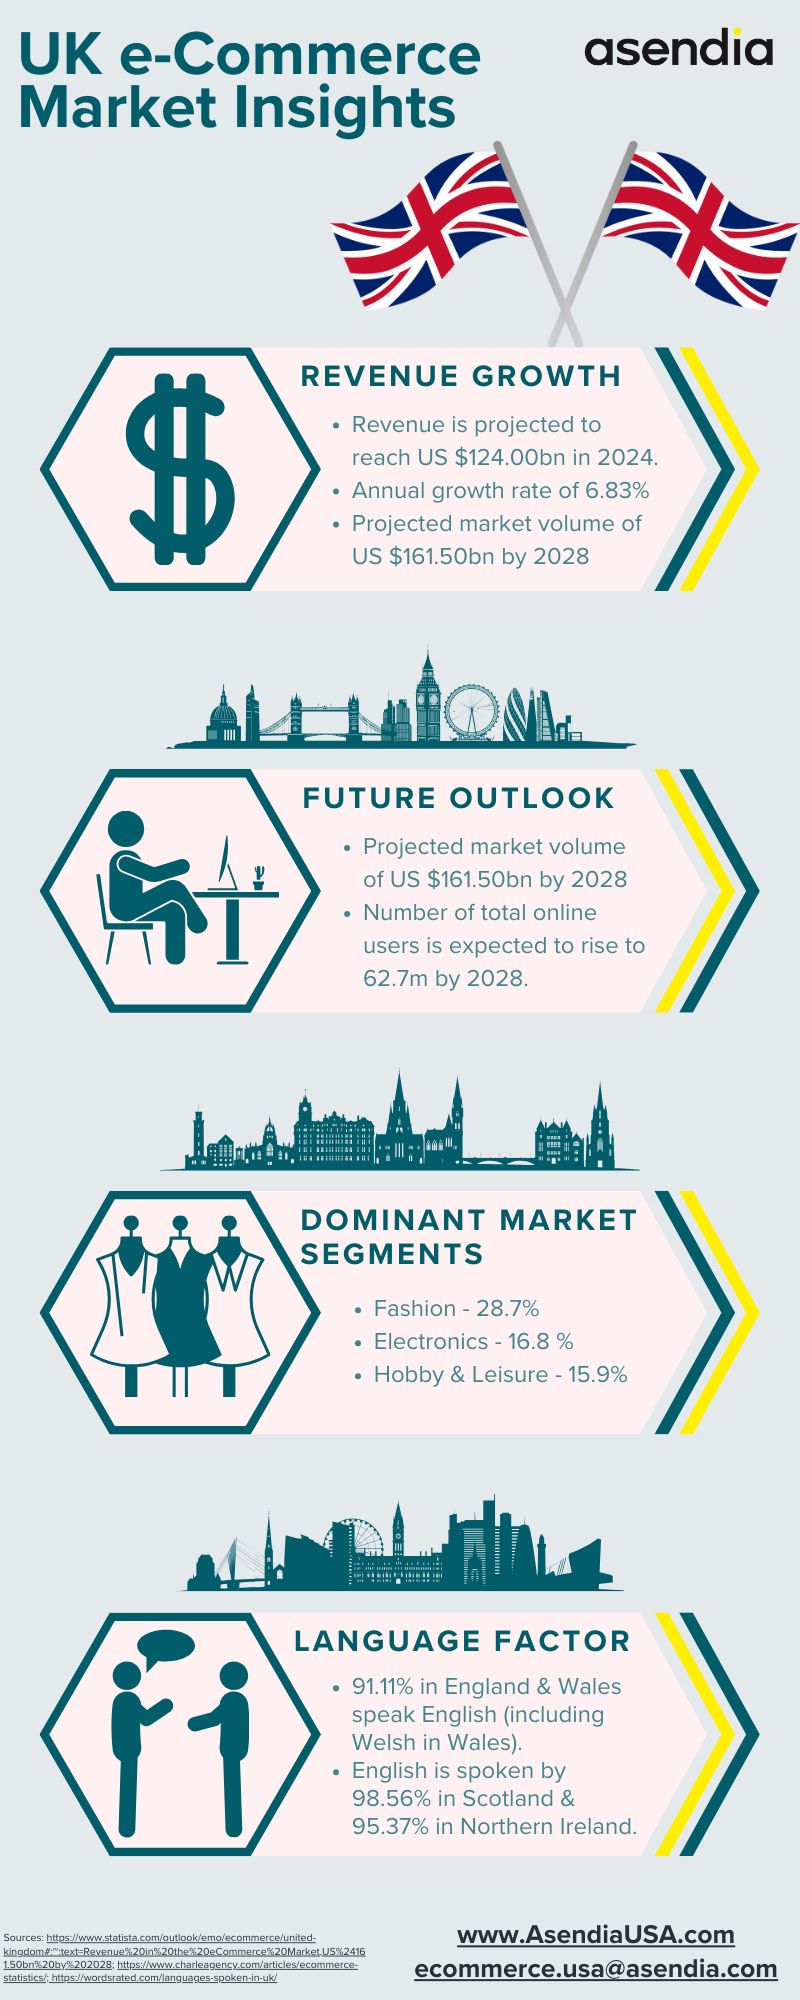 UK e-Commerce Market Insights_infographic_Asendia USA